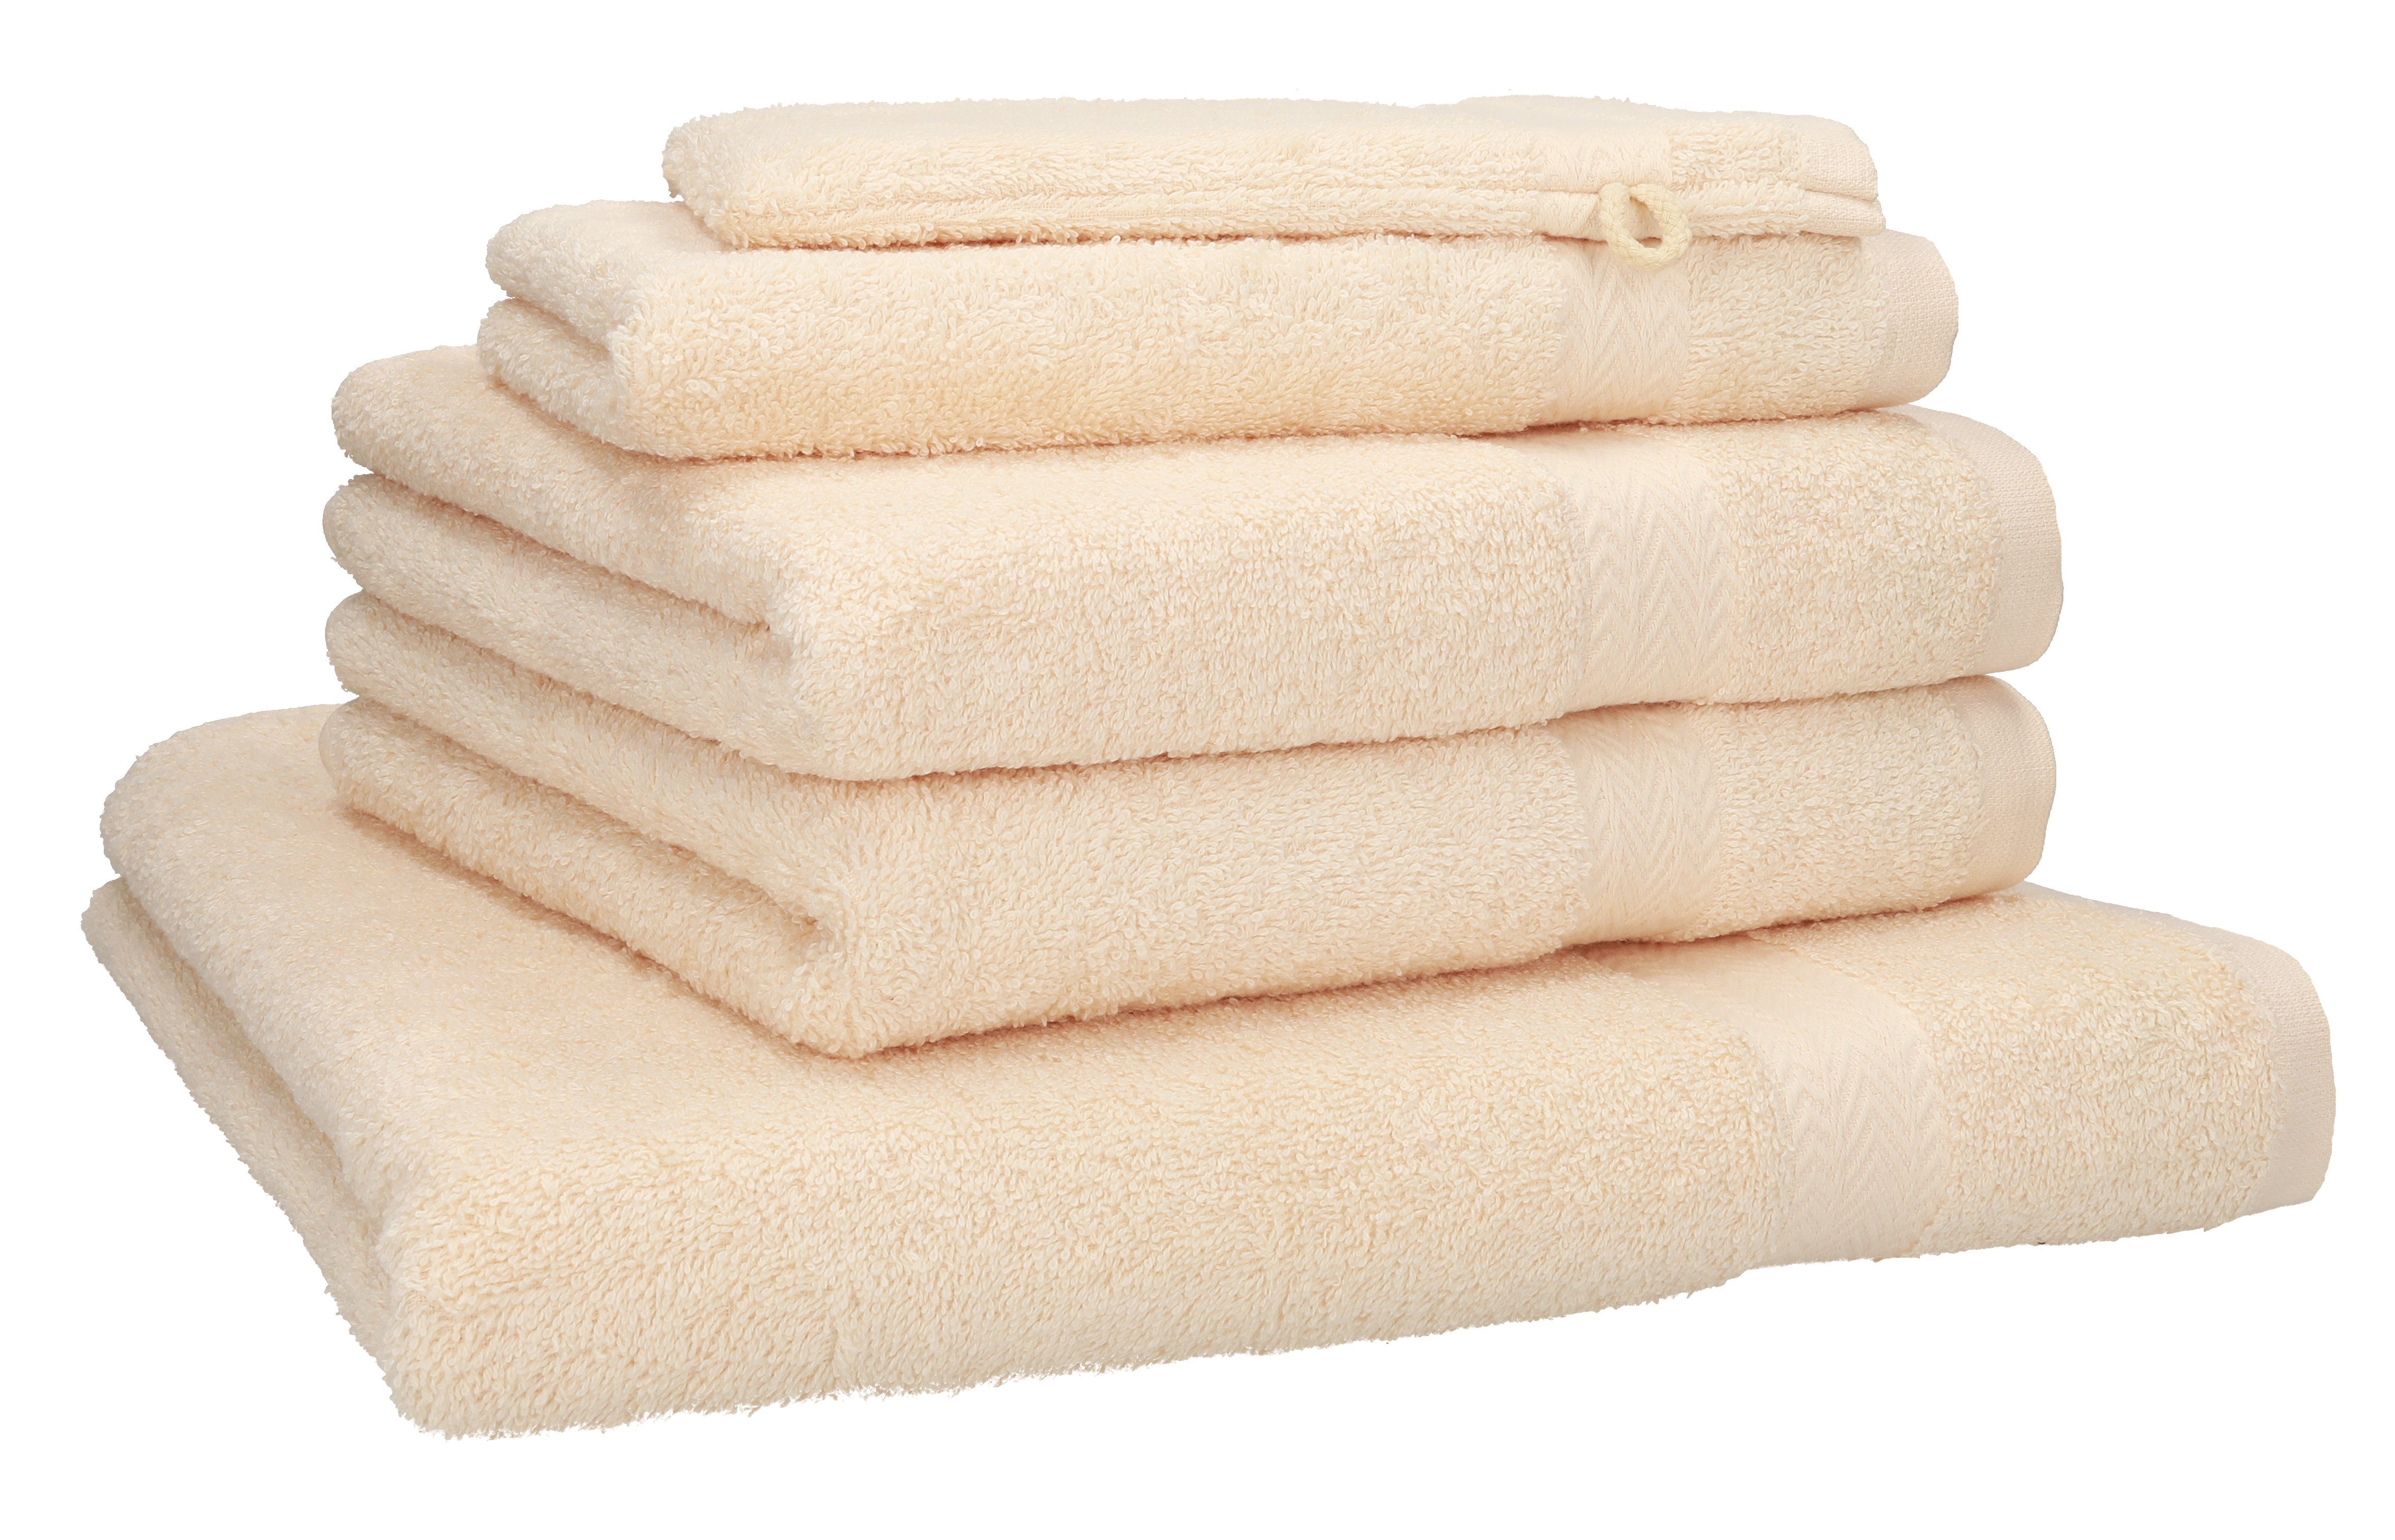 Duschtuch Set Betz 1 1 5-TLG. 1 Baumwolle 100% Premium Handtuch Waschhandschuh, 2 Gästetuch Handtücher